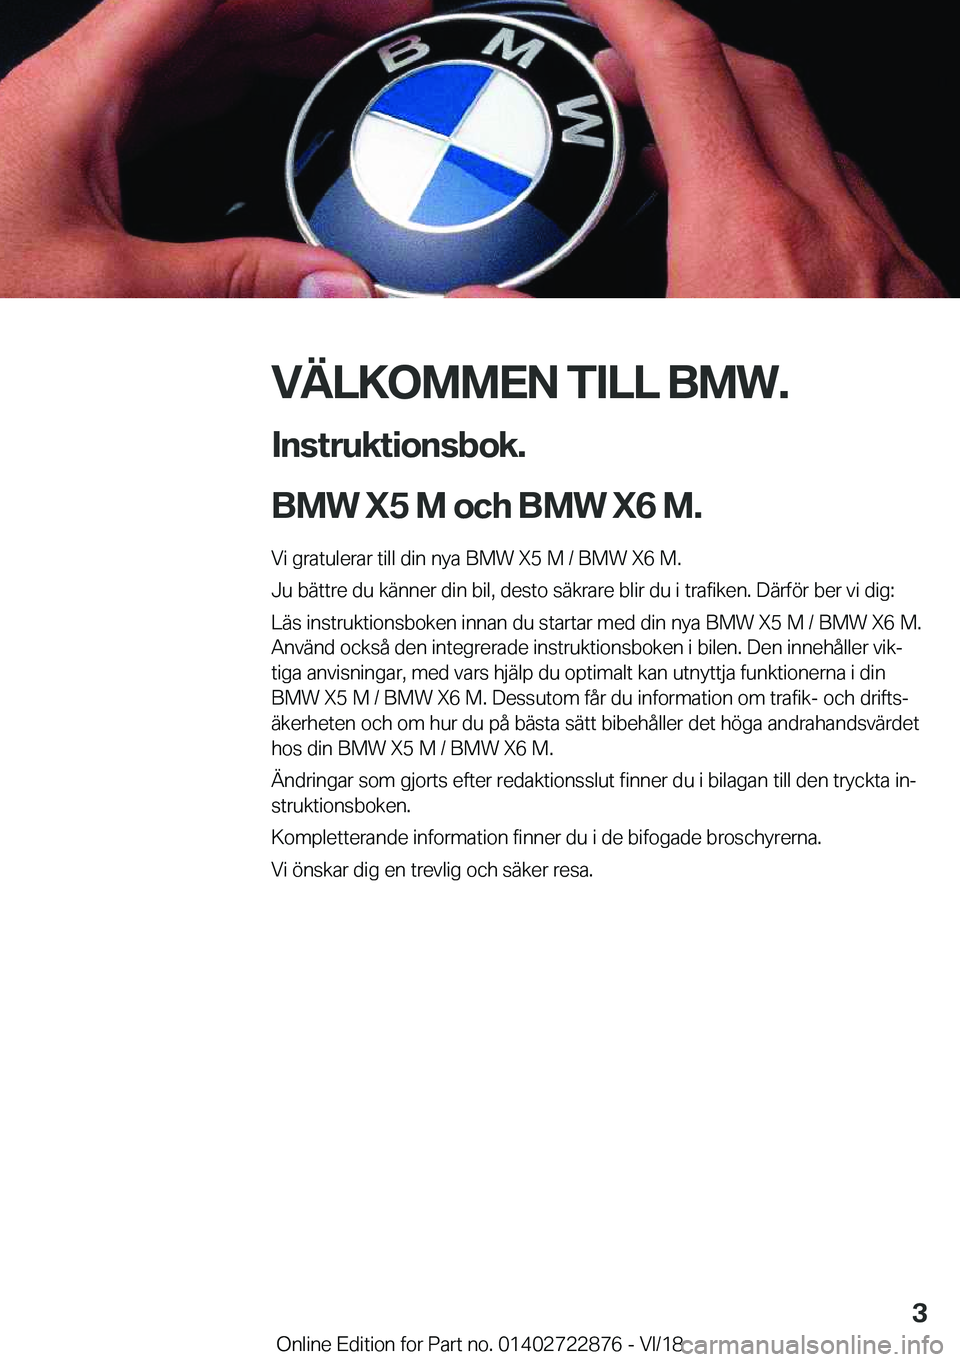 BMW X6 M 2019  InstruktionsbÖcker (in Swedish) �V�Ä�L�K�O�M�M�E�N��T�I�L�L��B�M�W�.�I�n�s�t�r�u�k�t�i�o�n�s�b�o�k�.
�B�M�W��X�5��M��o�c�h��B�M�W��X�6��M�.
�V�i��g�r�a�t�u�l�e�r�a�r��t�i�l�l��d�i�n��n�y�a��B�M�W��X�5��M��/��B�M�W�